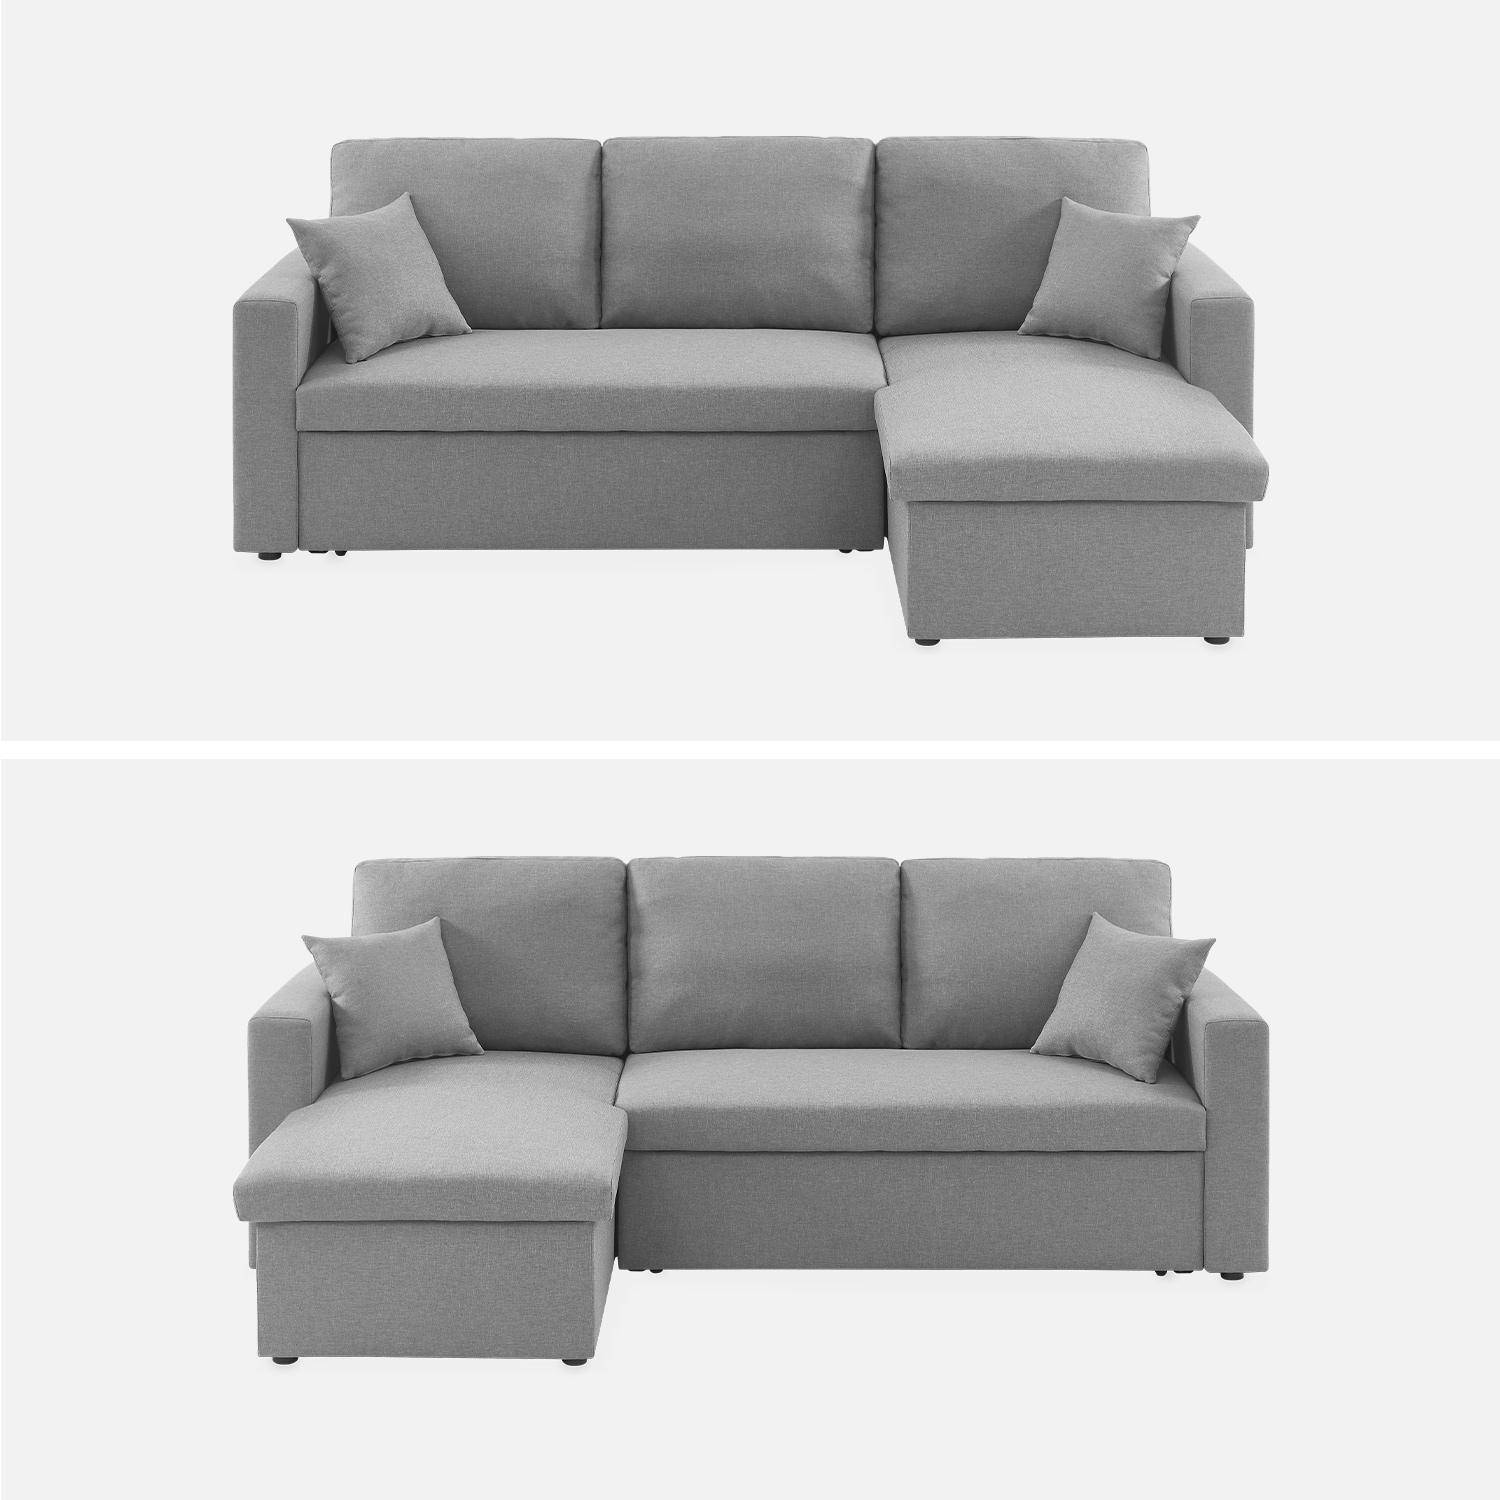 3-seater reversible light grey corner sofa bed with storage box, L219xD81xH68cm, IDA Photo4